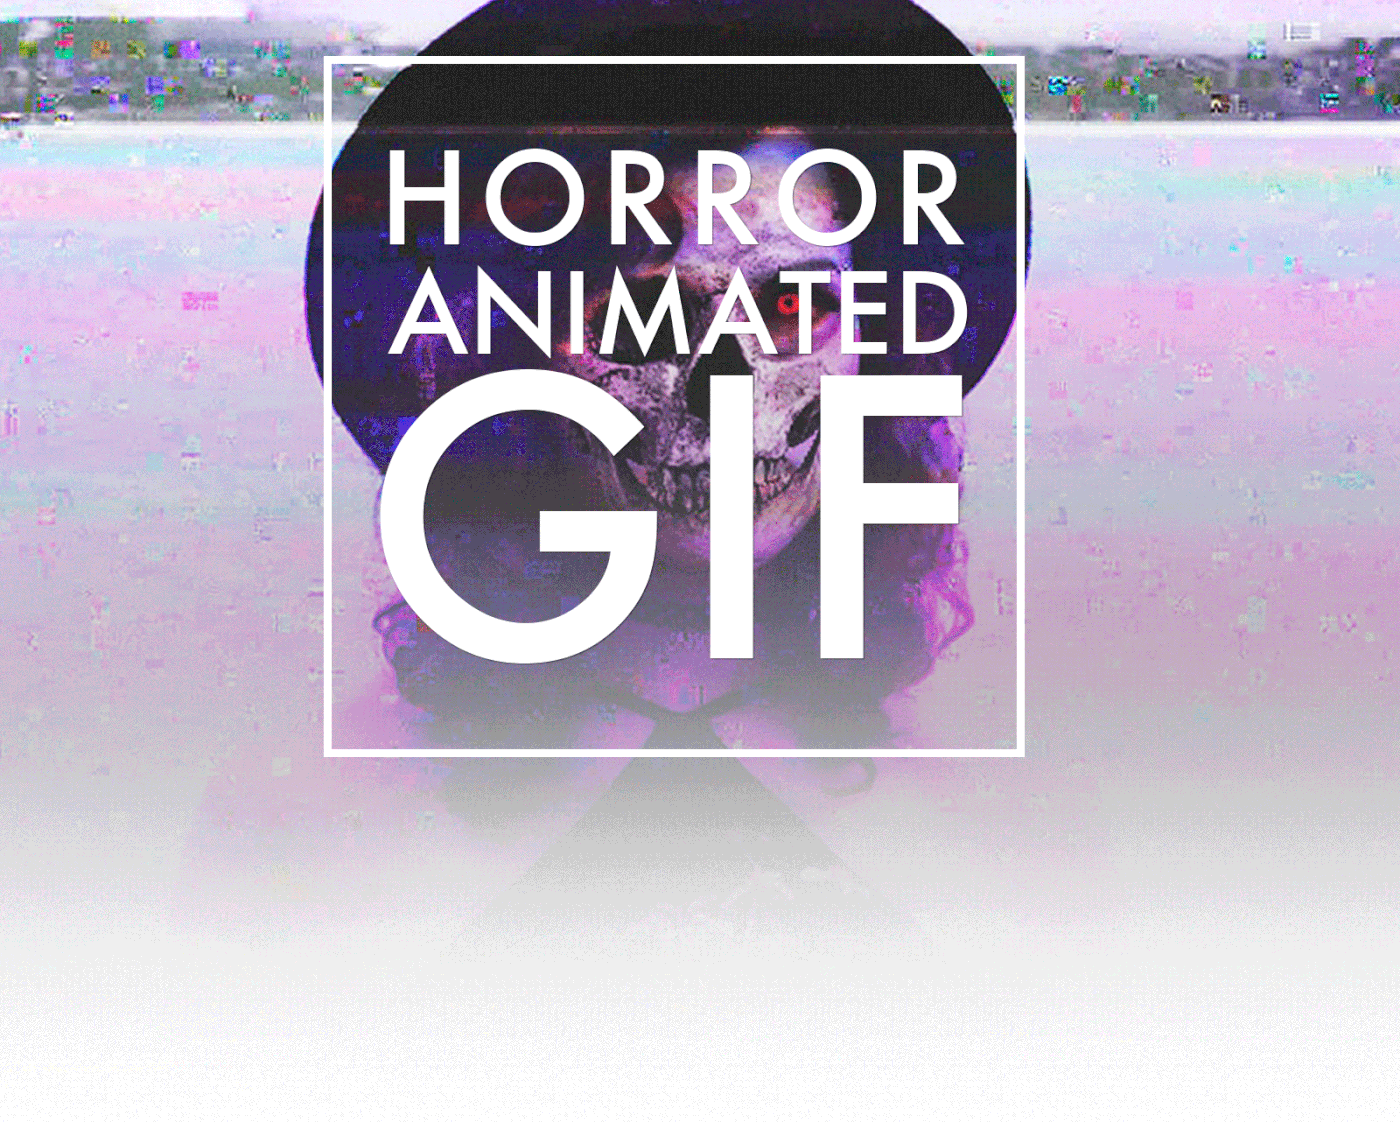 Horror GIF Animation on Behance